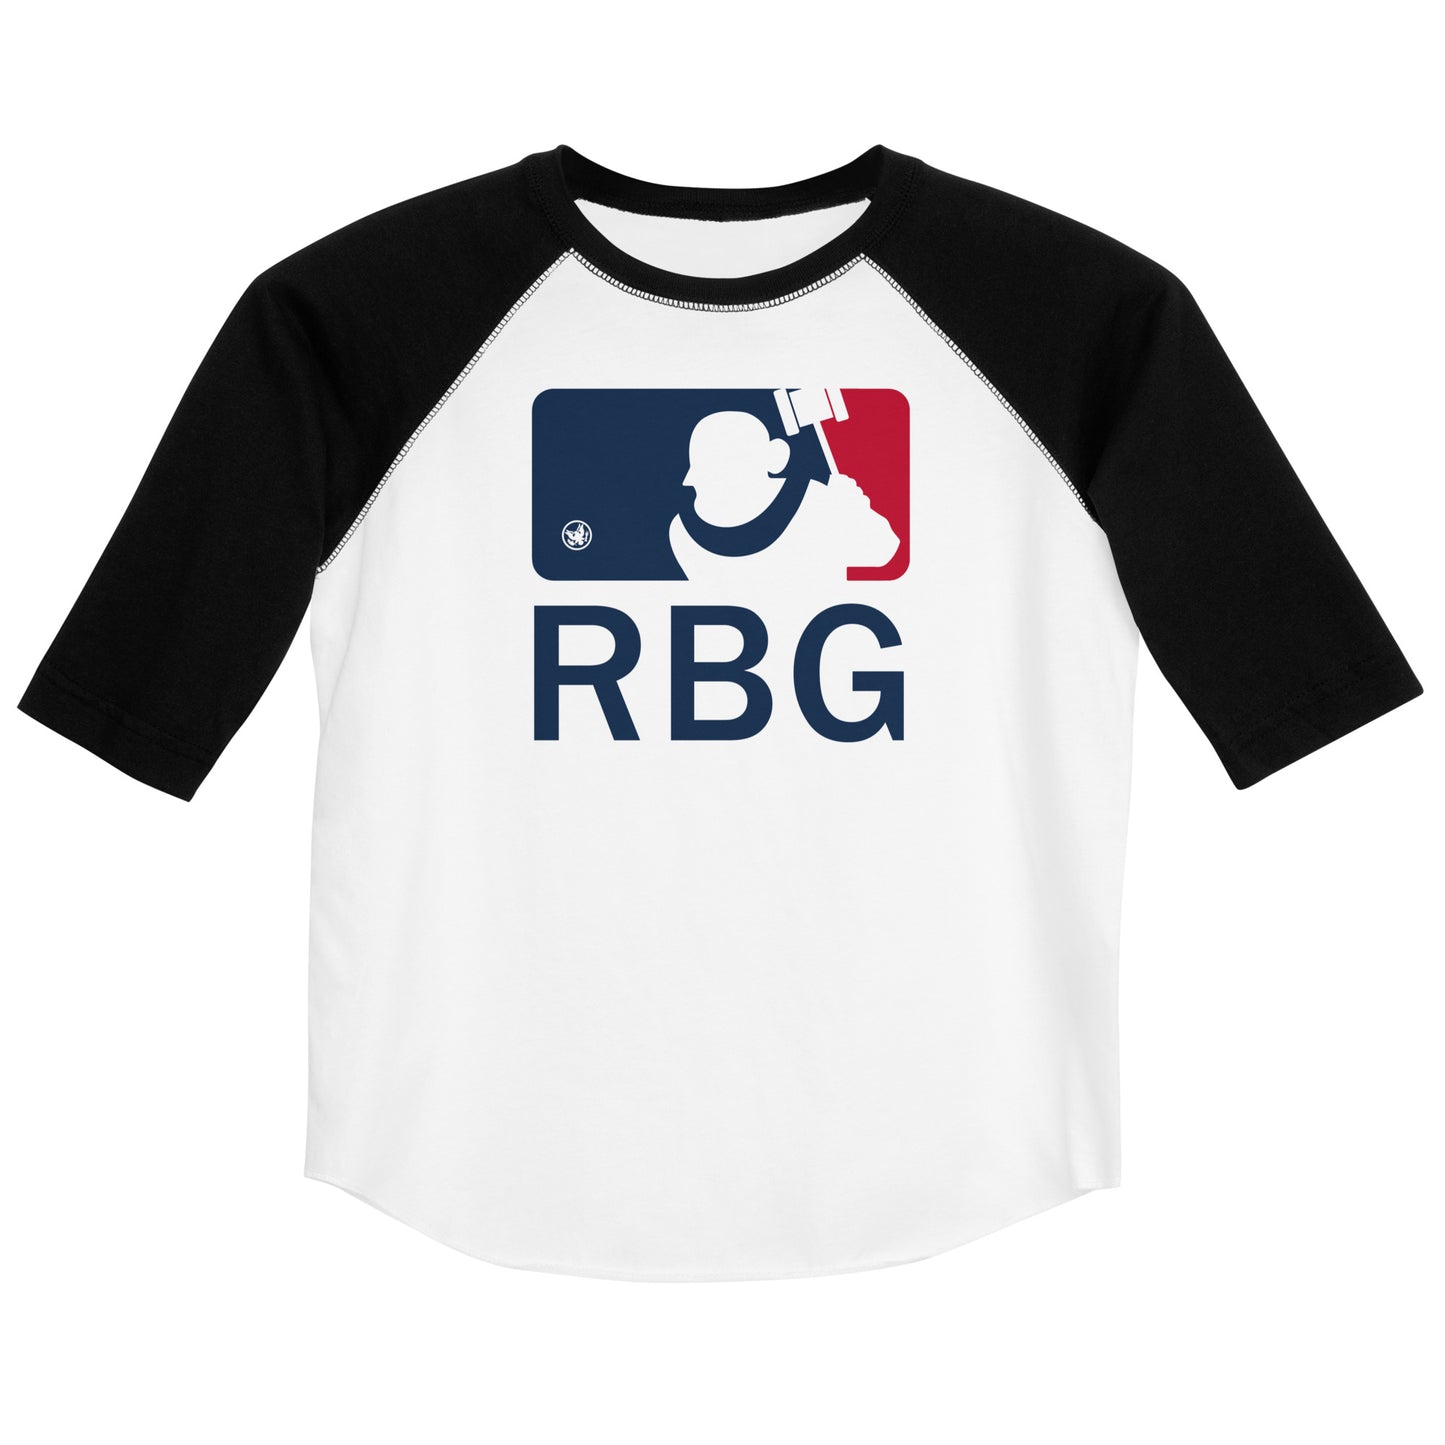 "Major League RBG" Youth baseball shirt